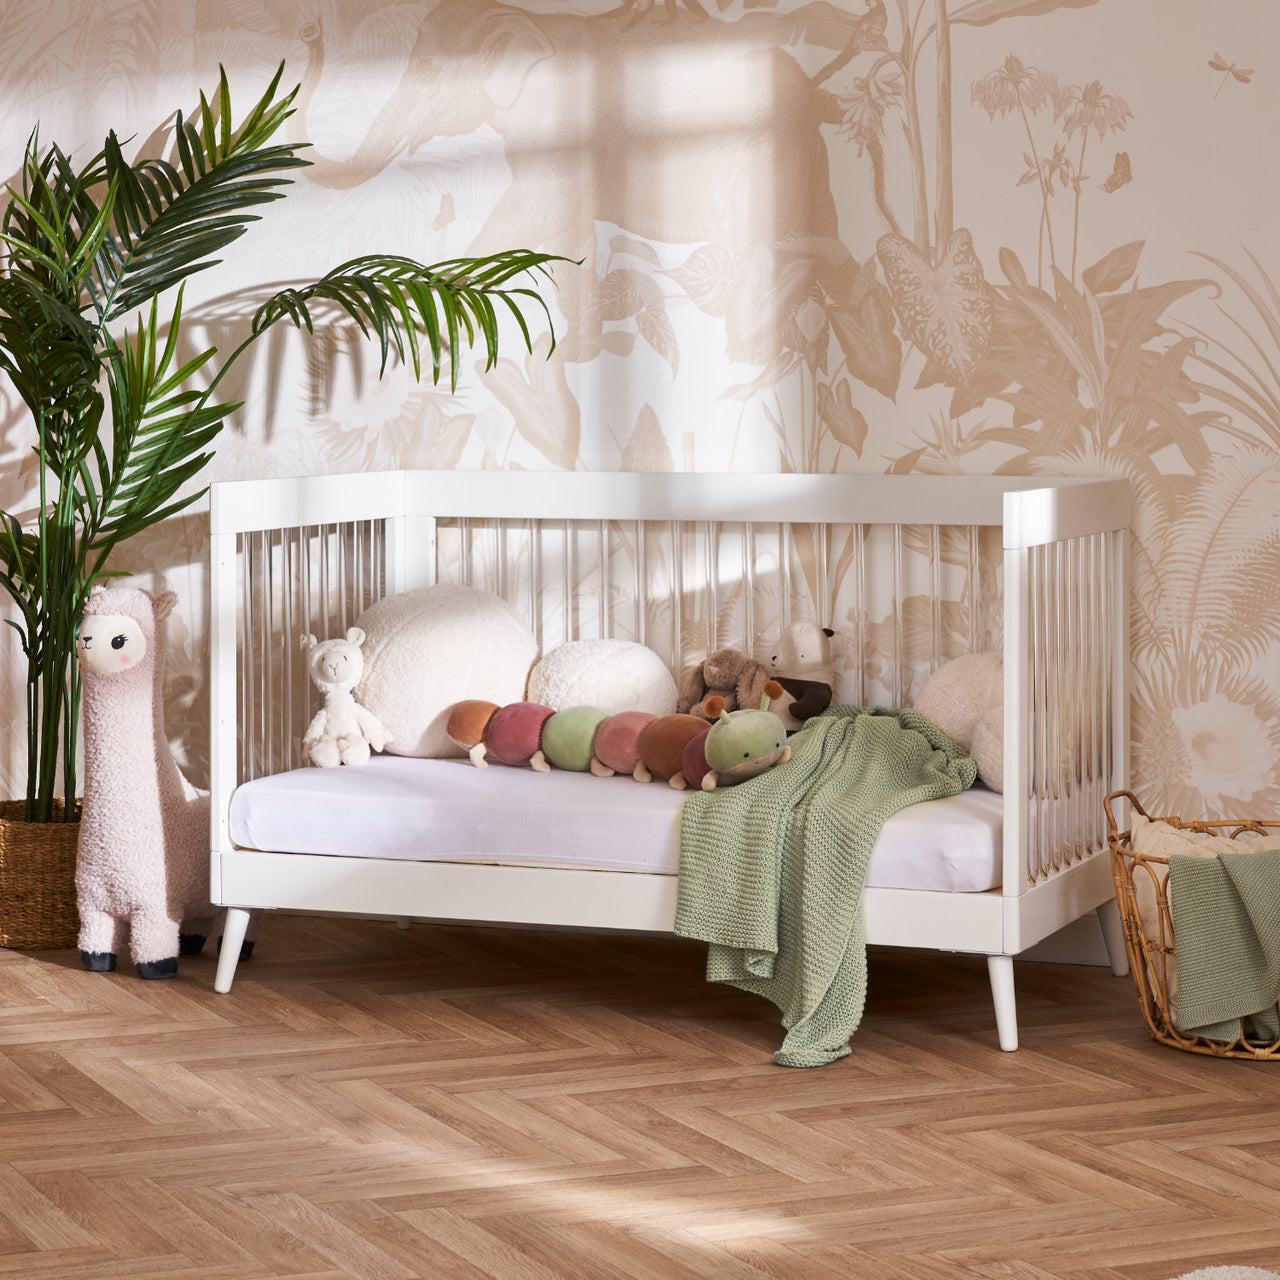 Maya Scandi Cot Bed, White with Acrylic